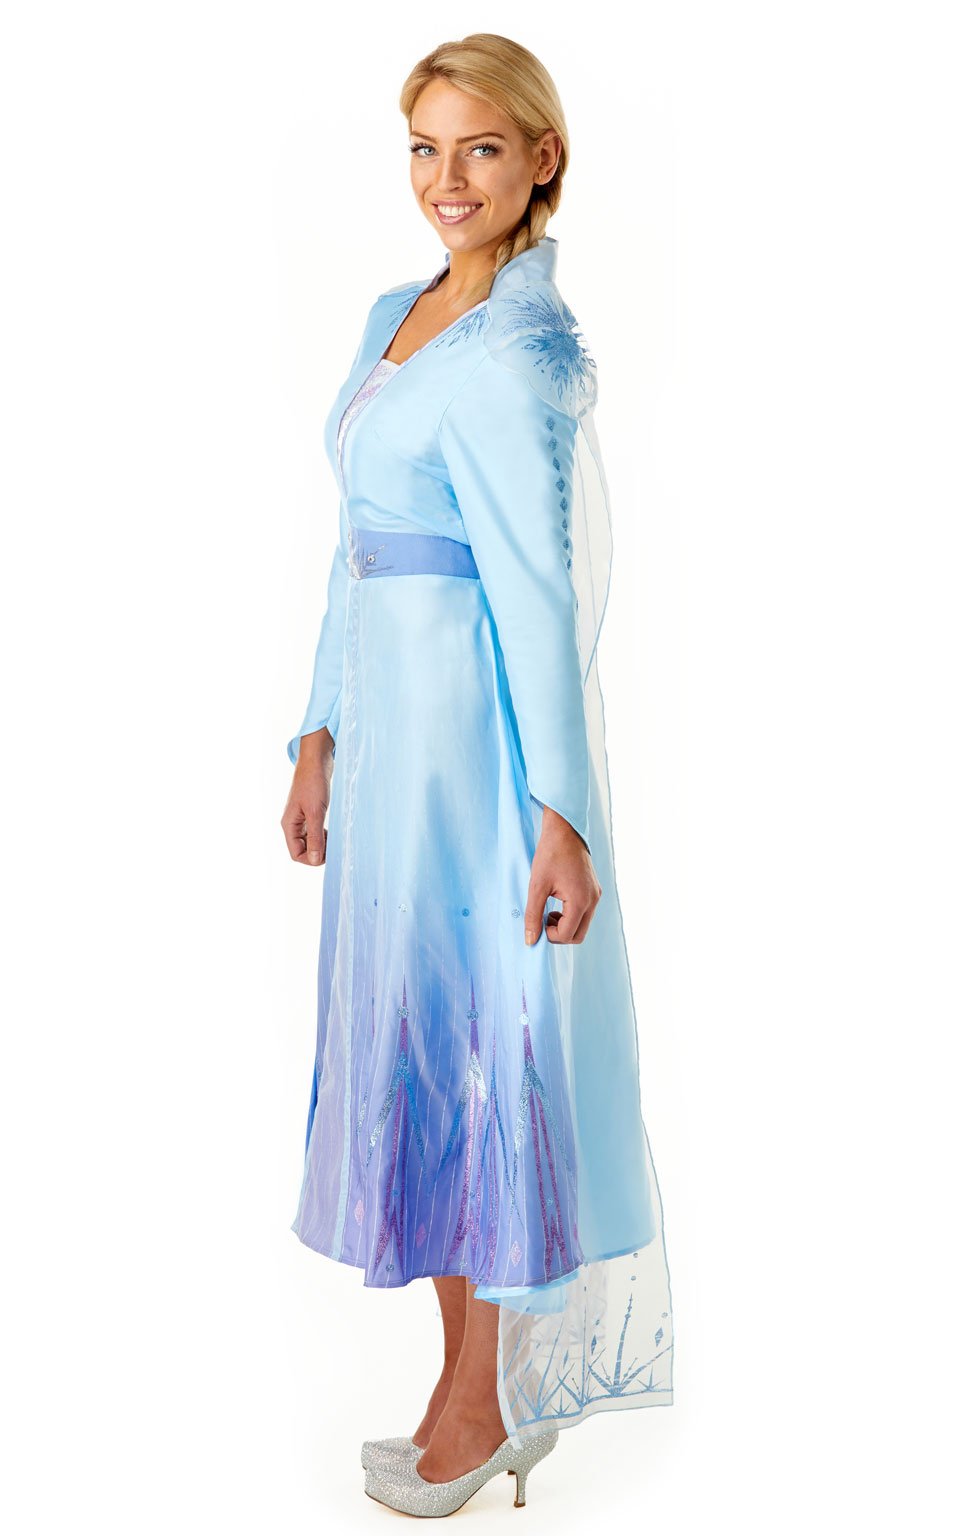 Cosplay Frozen 2 Princess Elsa Dresses Halloween Carnival Suits Women  Costumes | eBay